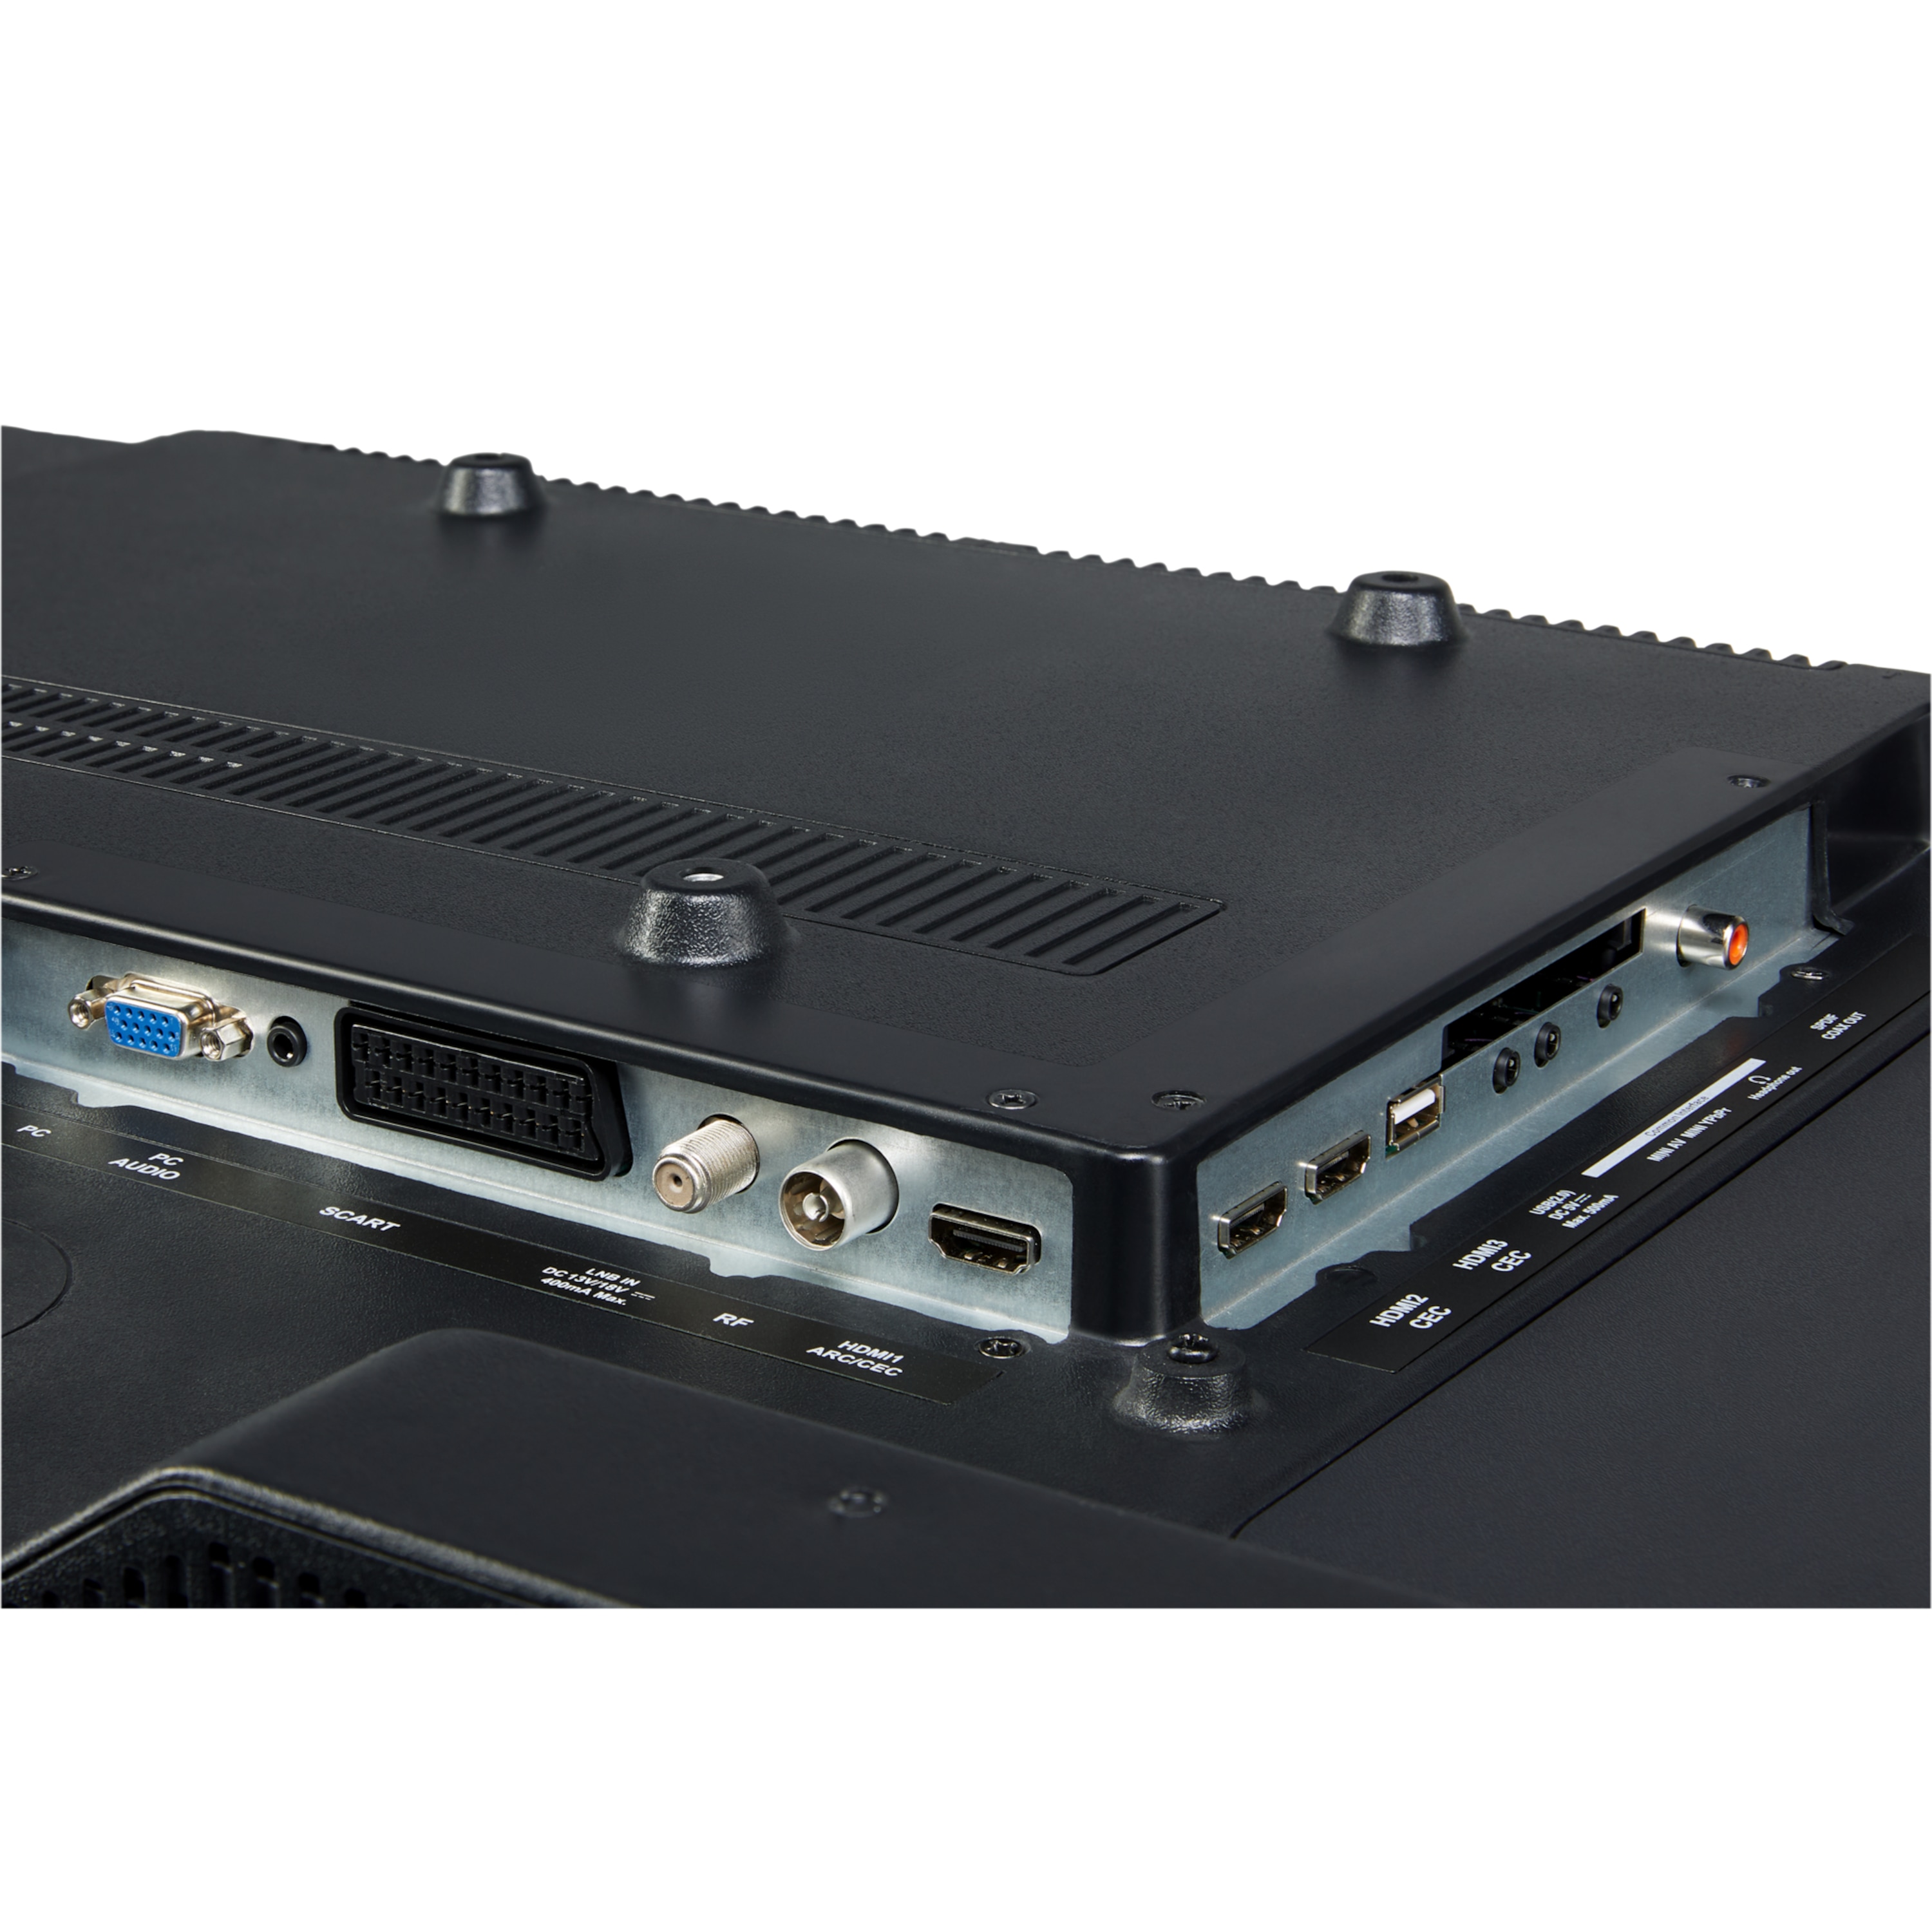 MEDION® LIFE® E14006 (MD 30733) TV, 100,3 cm (40''), Full HD, HD Triple Tuner, integrierter DVD-Player, integrierter Mediaplayer, CI+